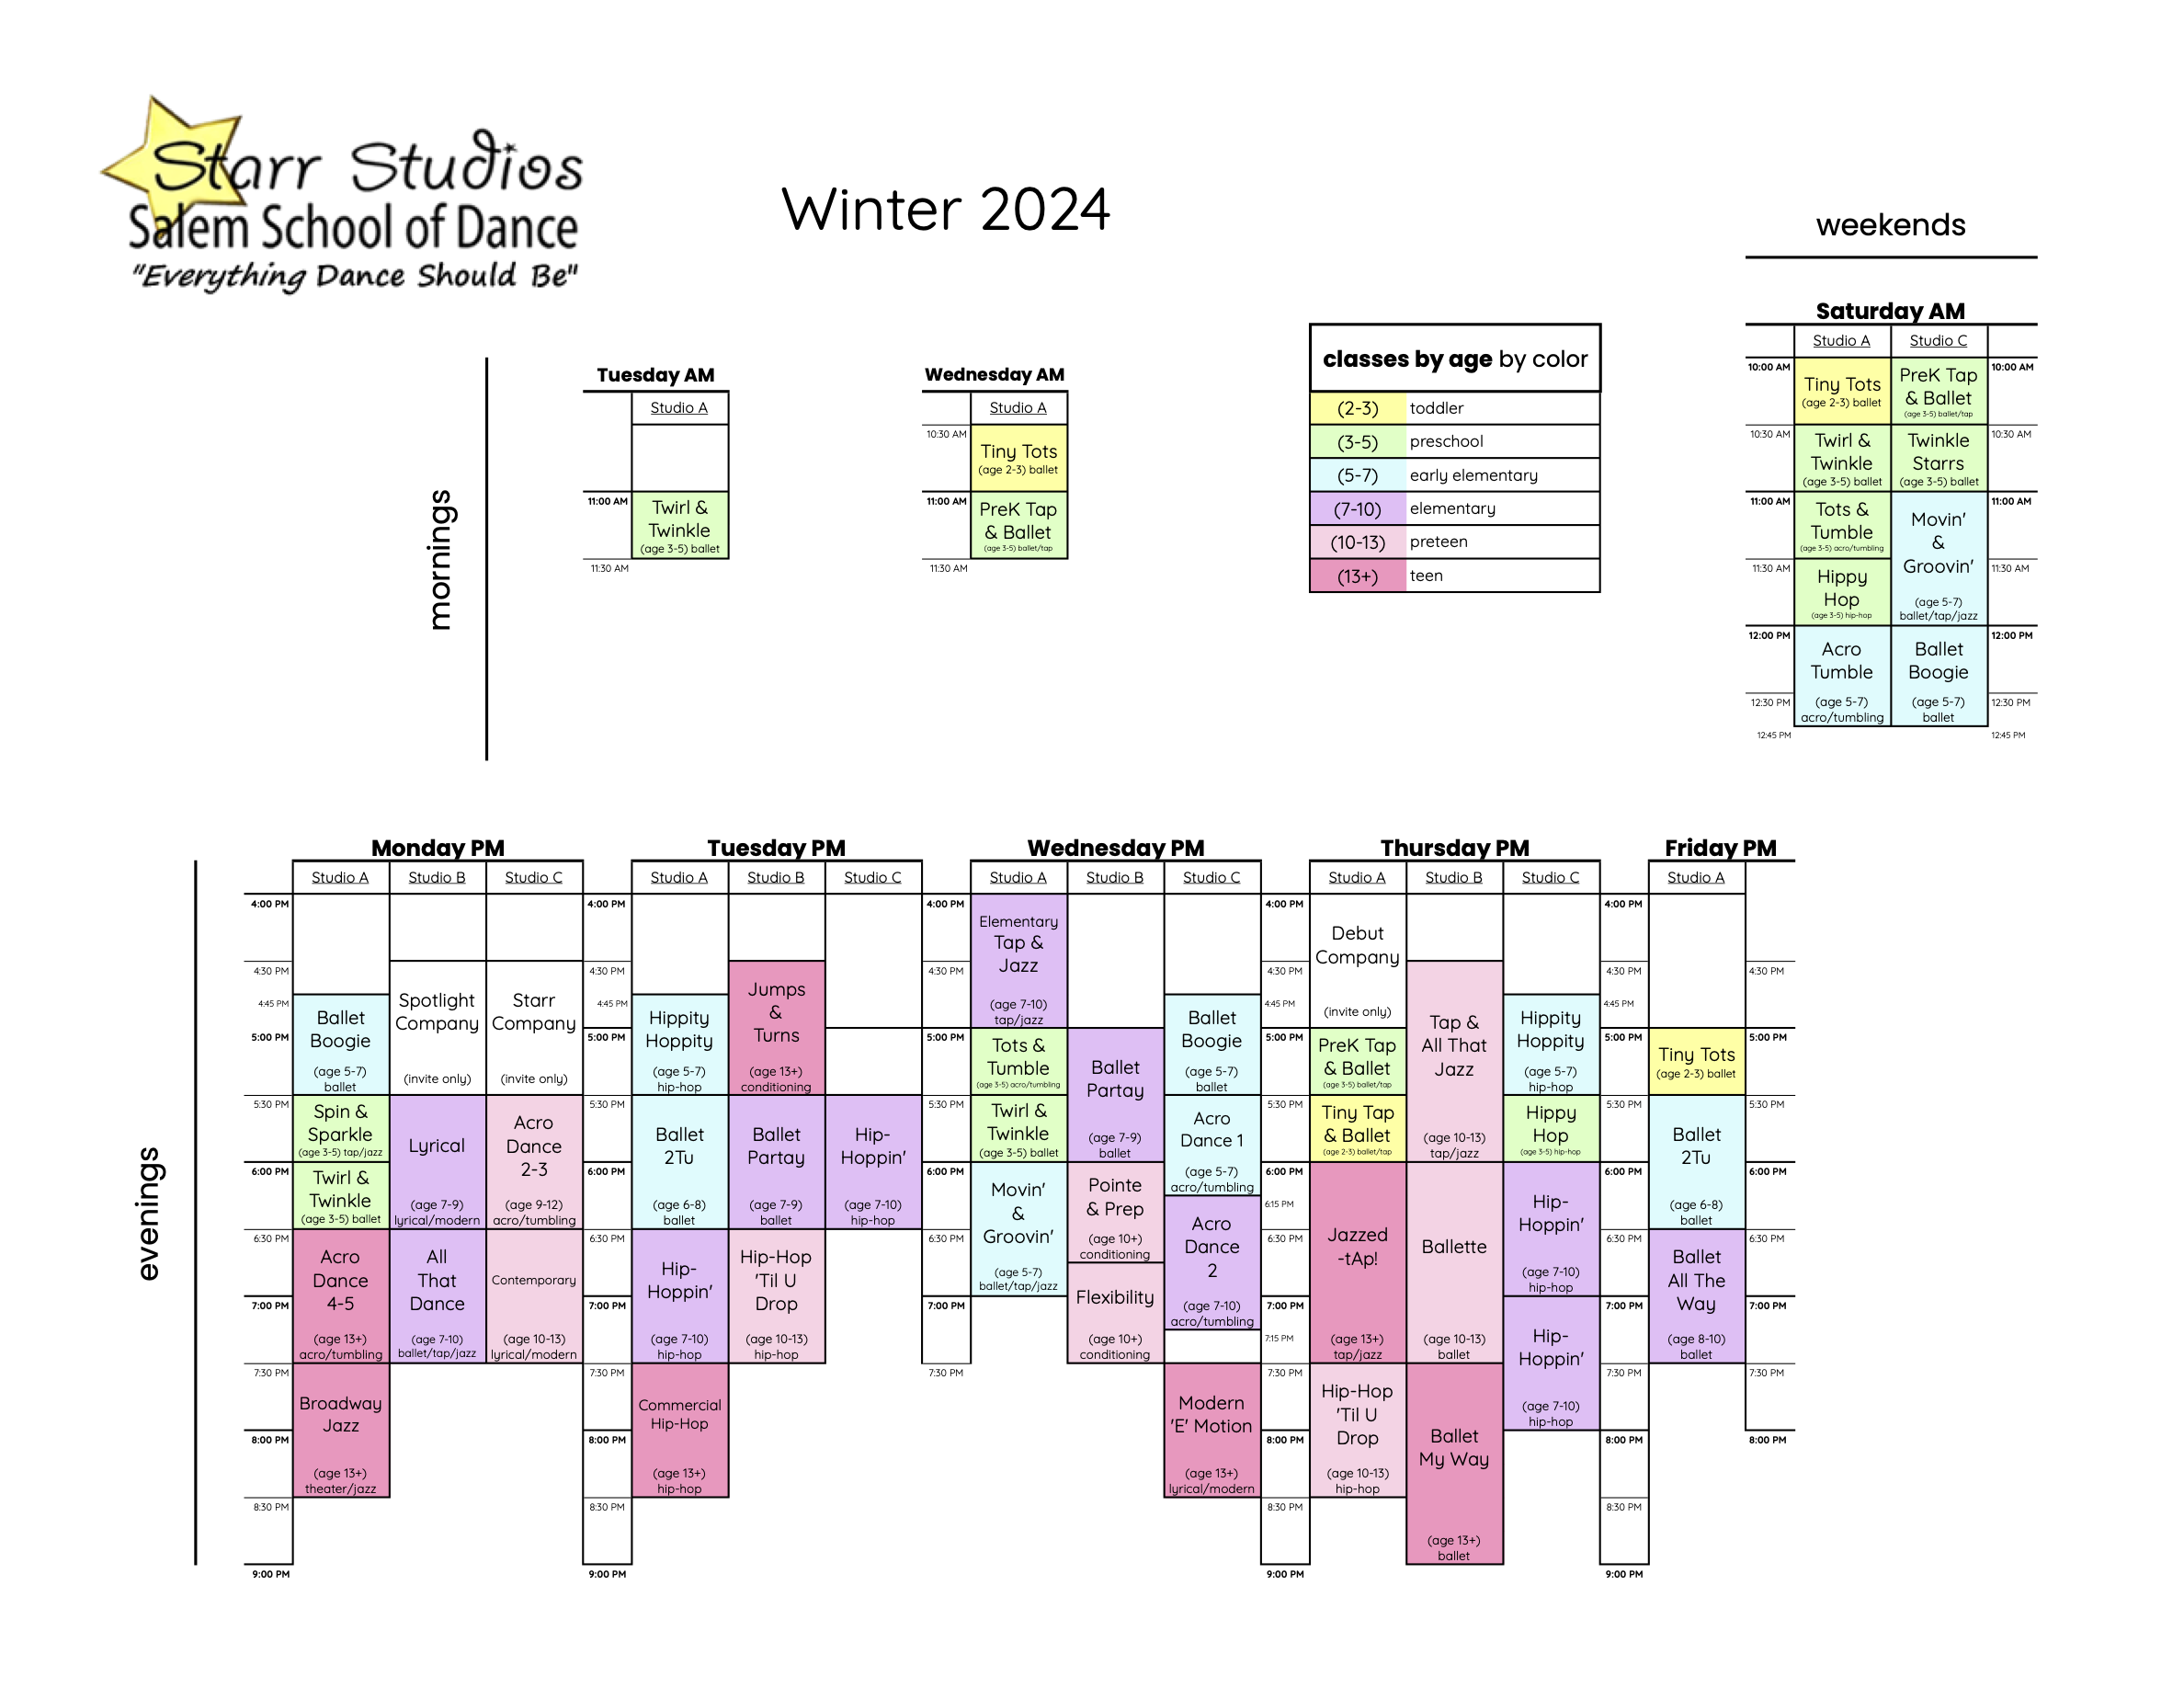 Starr Studios Fall 2023 class schedule